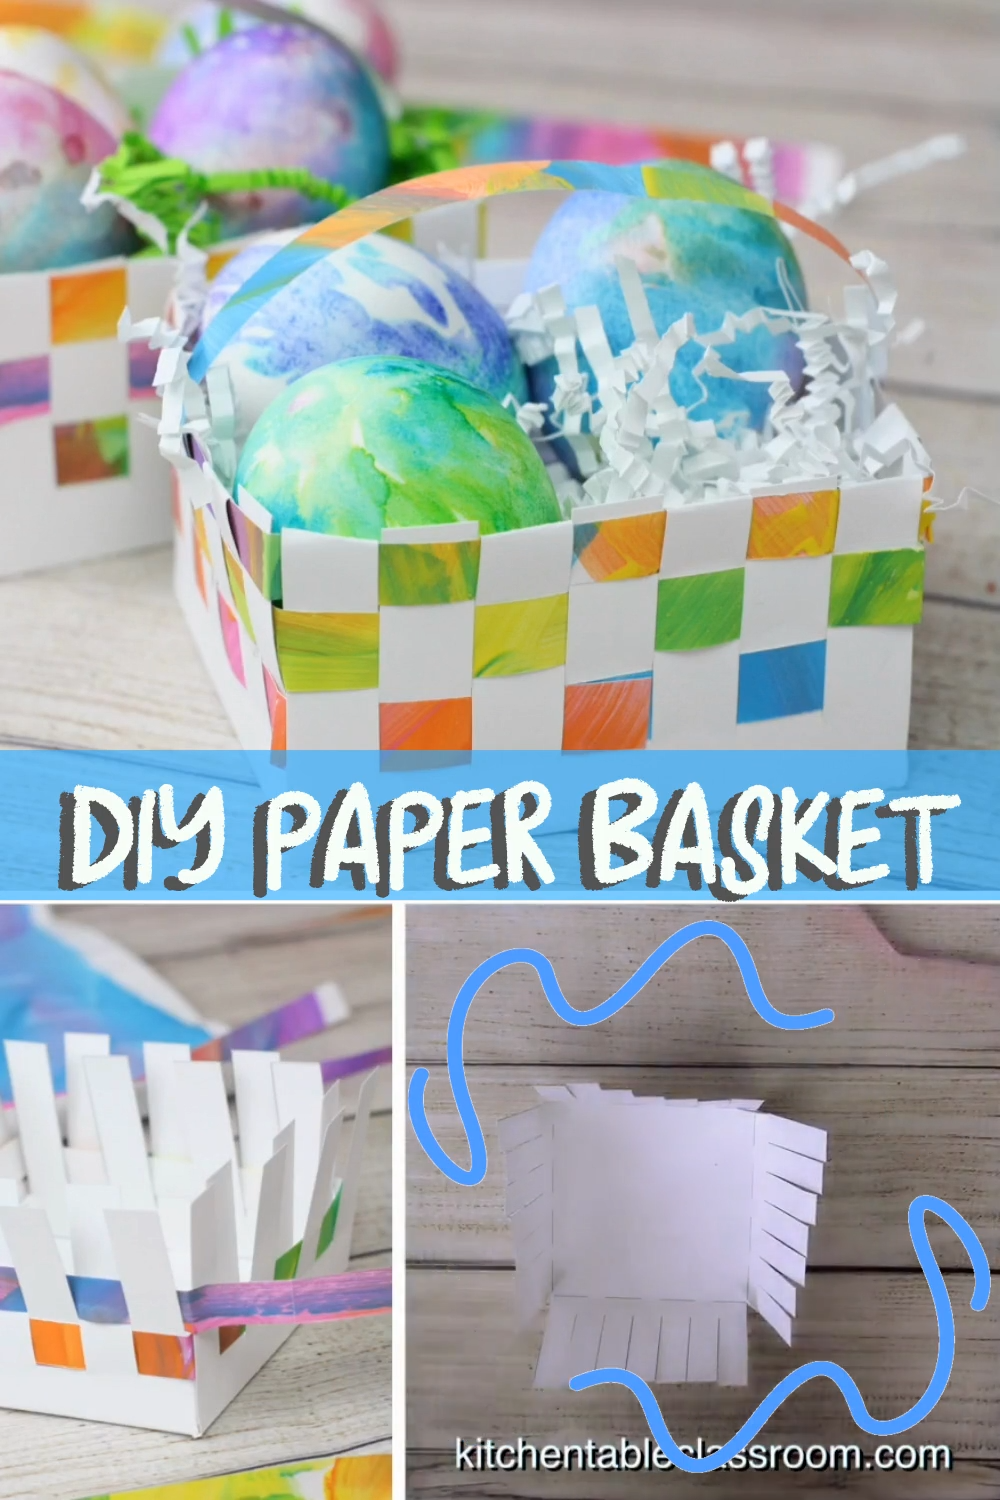 DIY Woven Paper Basket - DIY Woven Paper Basket -   17 diy Paper basket ideas